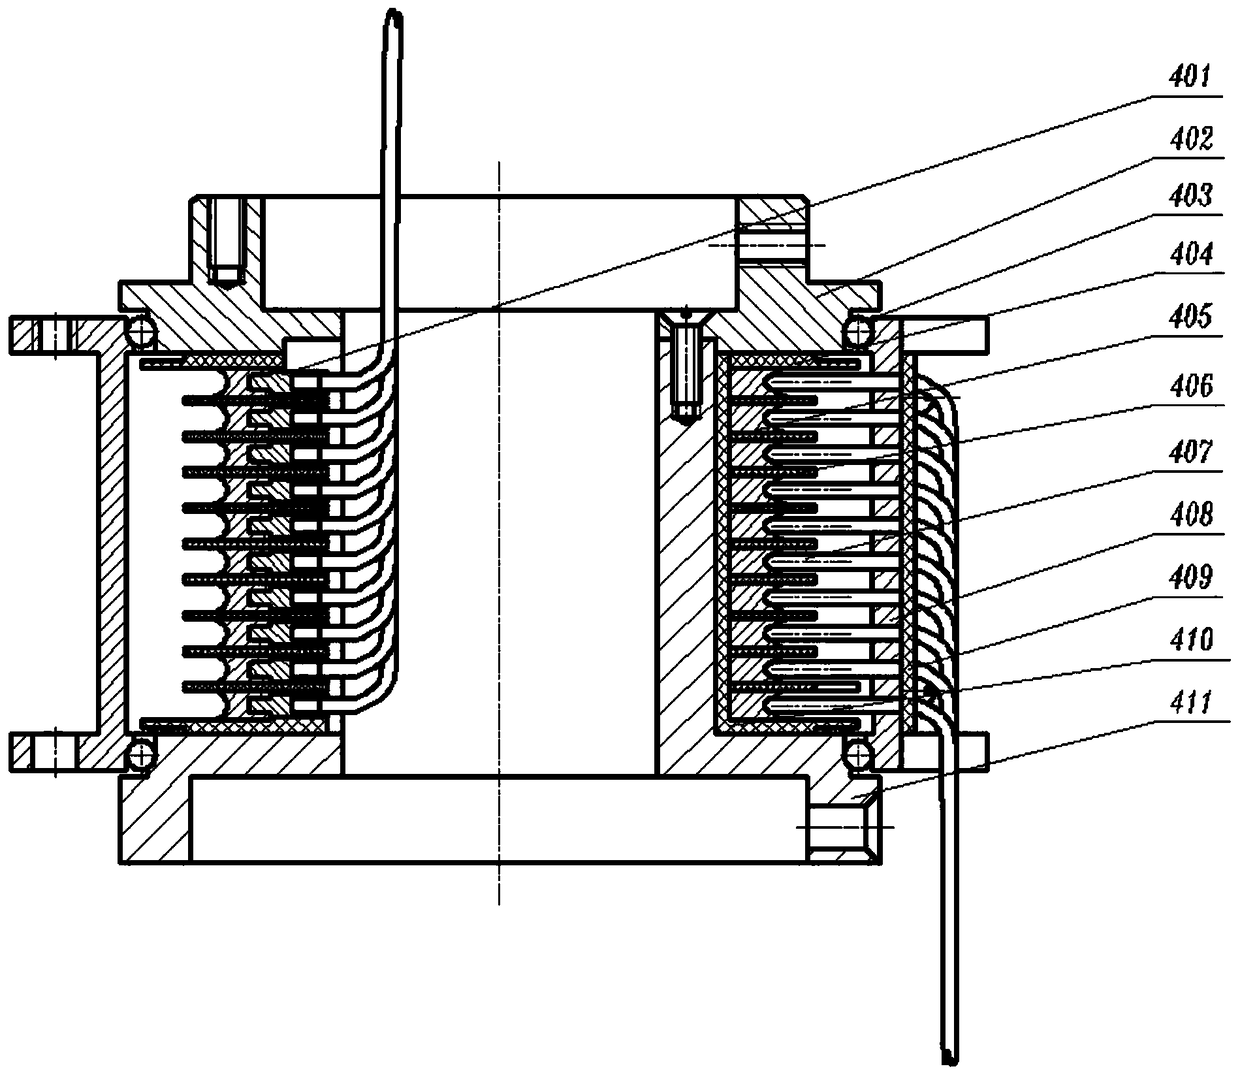 Modular circuit rotation transmission device